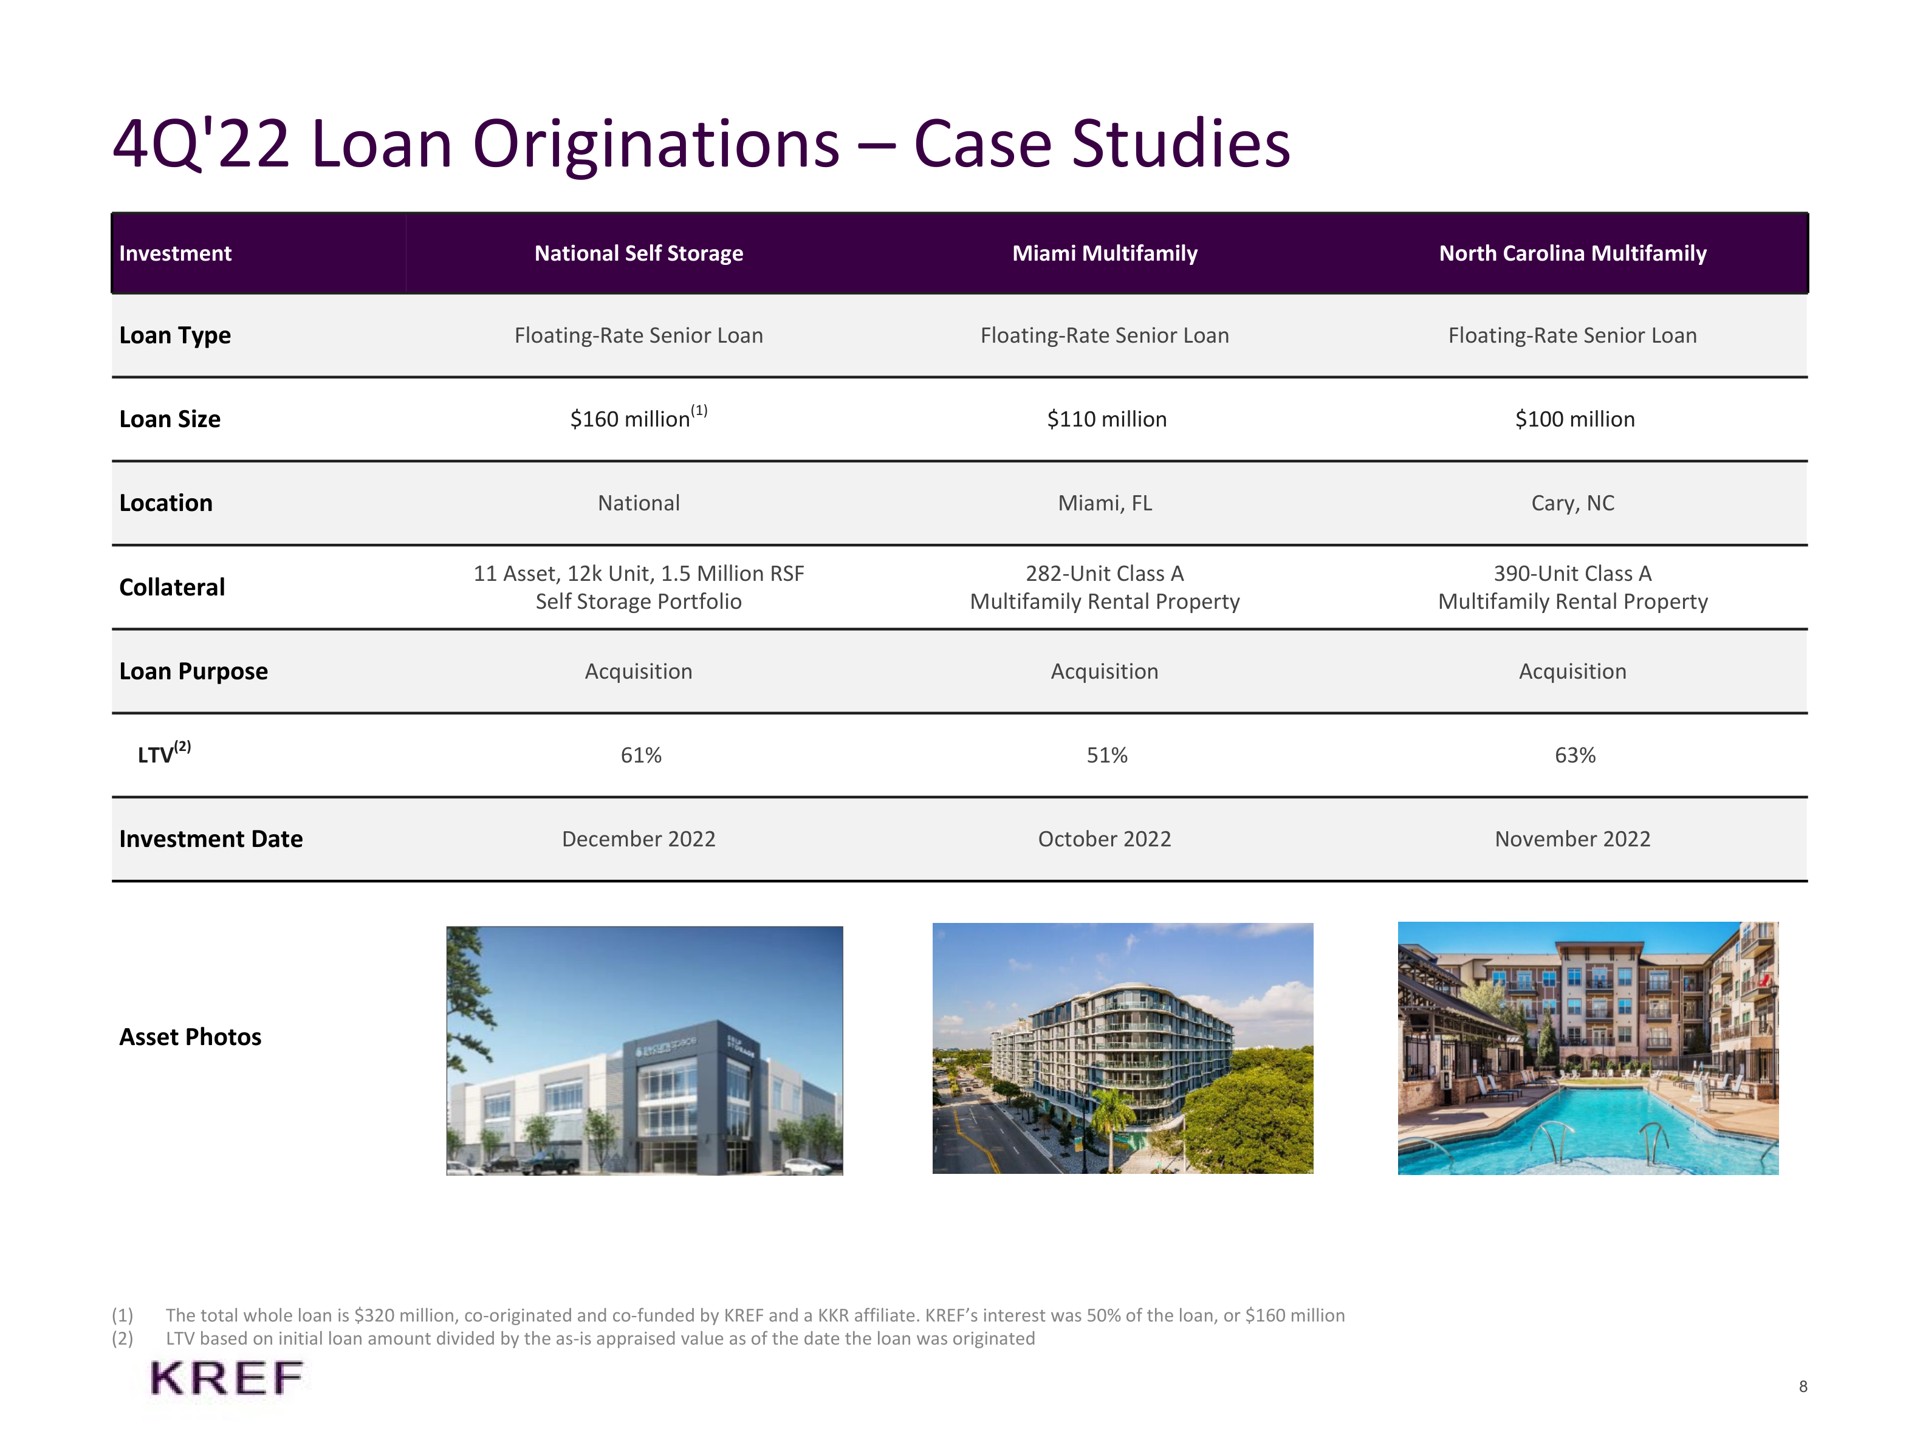 loan originations case studies | KKR Real Estate Finance Trust